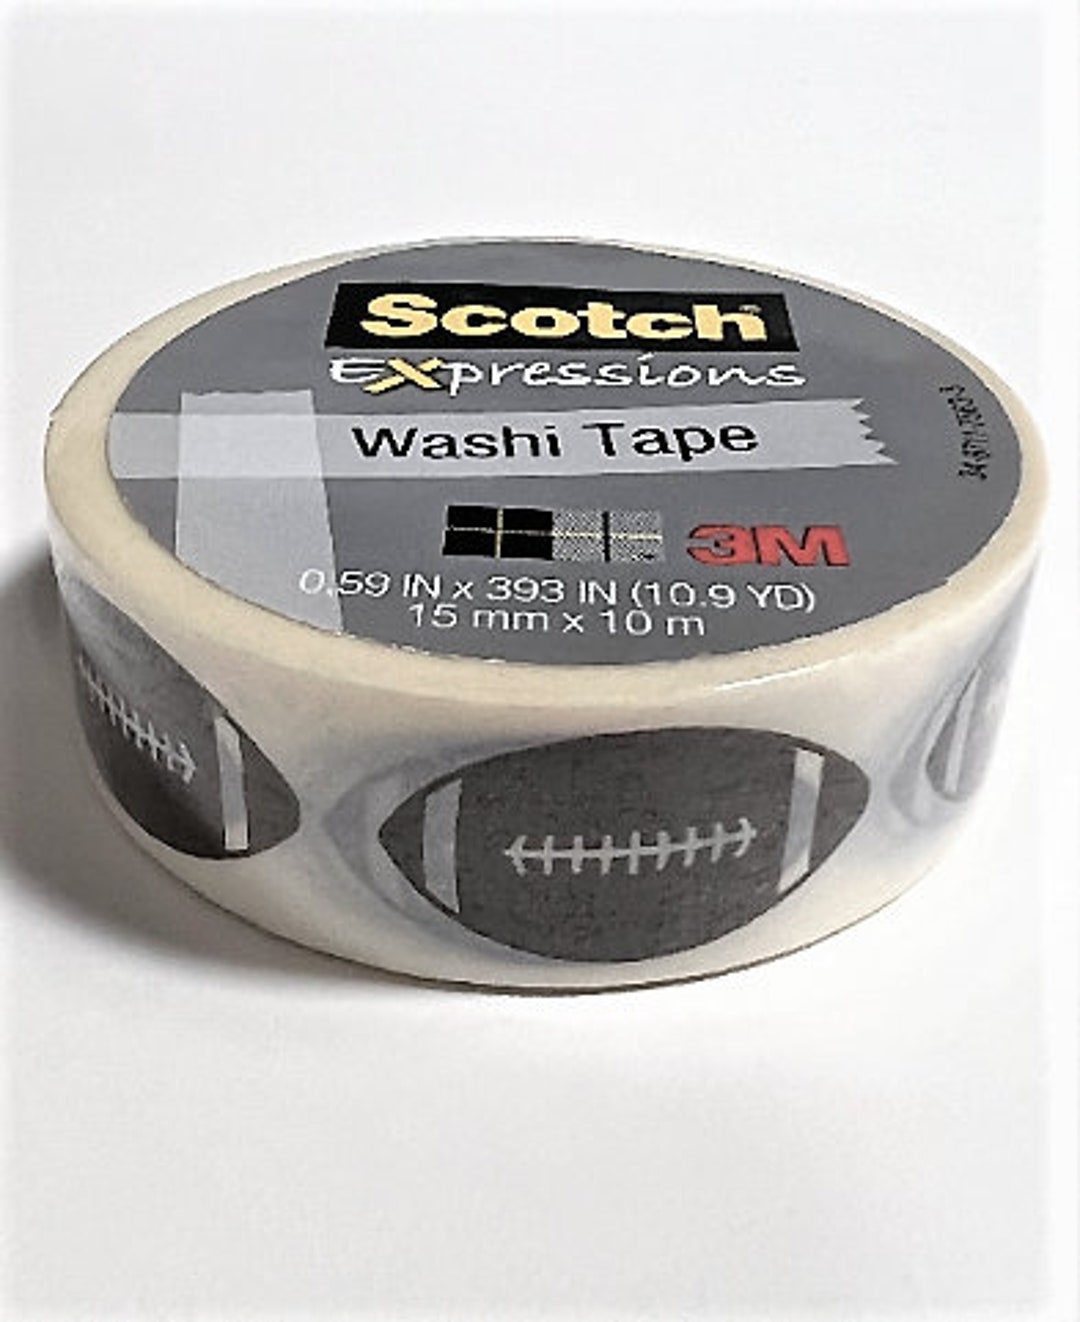 Scotch Expressions 3M Washi Tape 15mm 0.59 Wide 